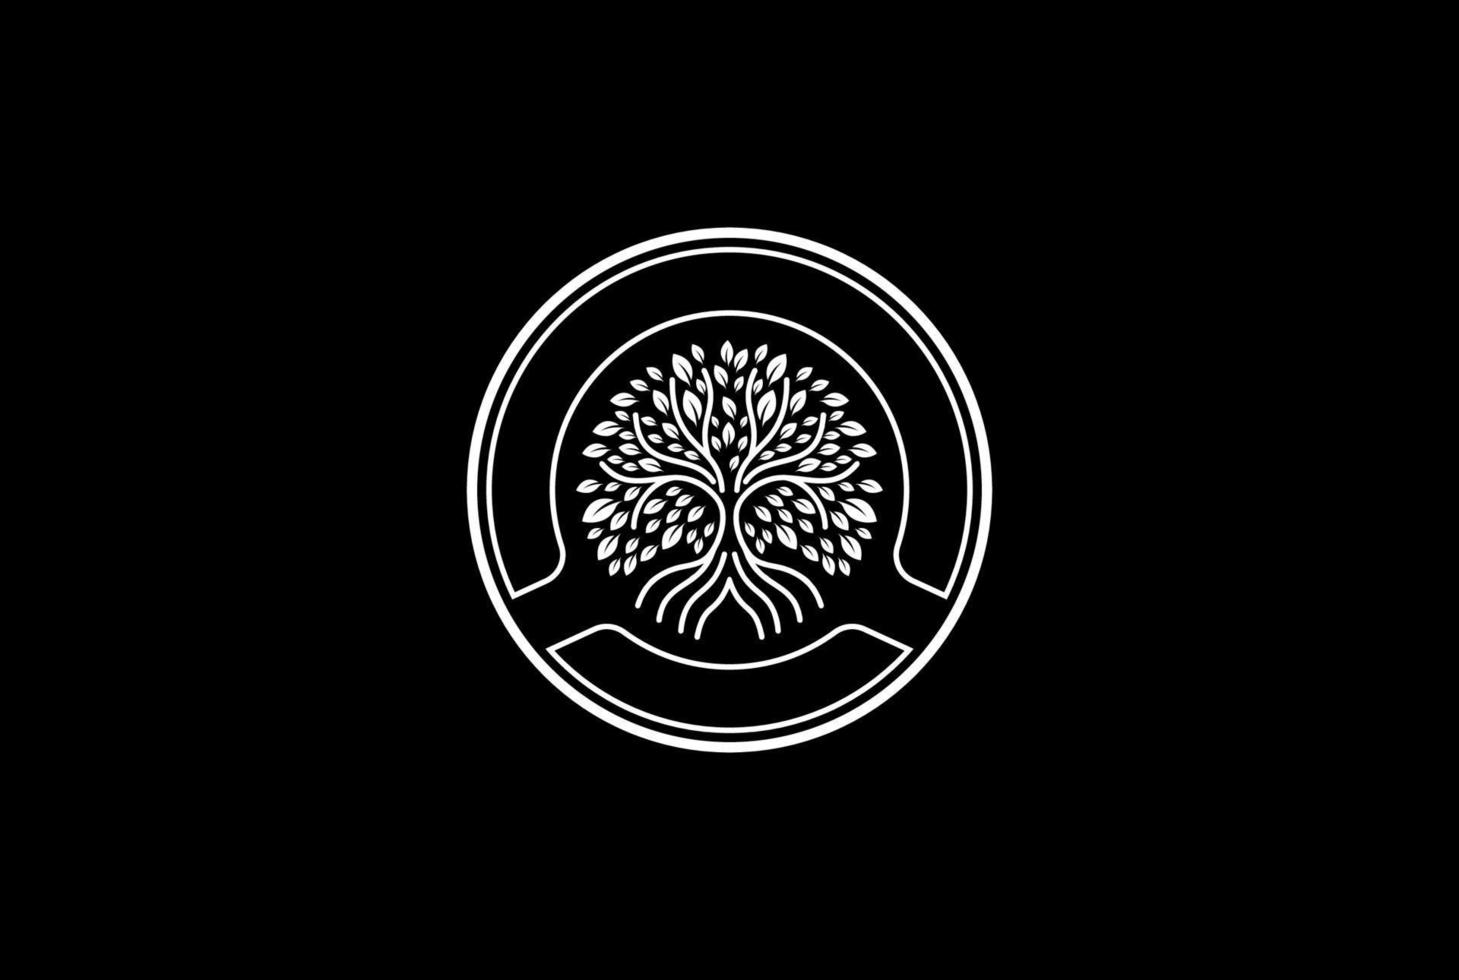 Stammbaum des Lebens Stempel Siegel Emblem Eiche Banyan Ahorn Logo Design Vektor